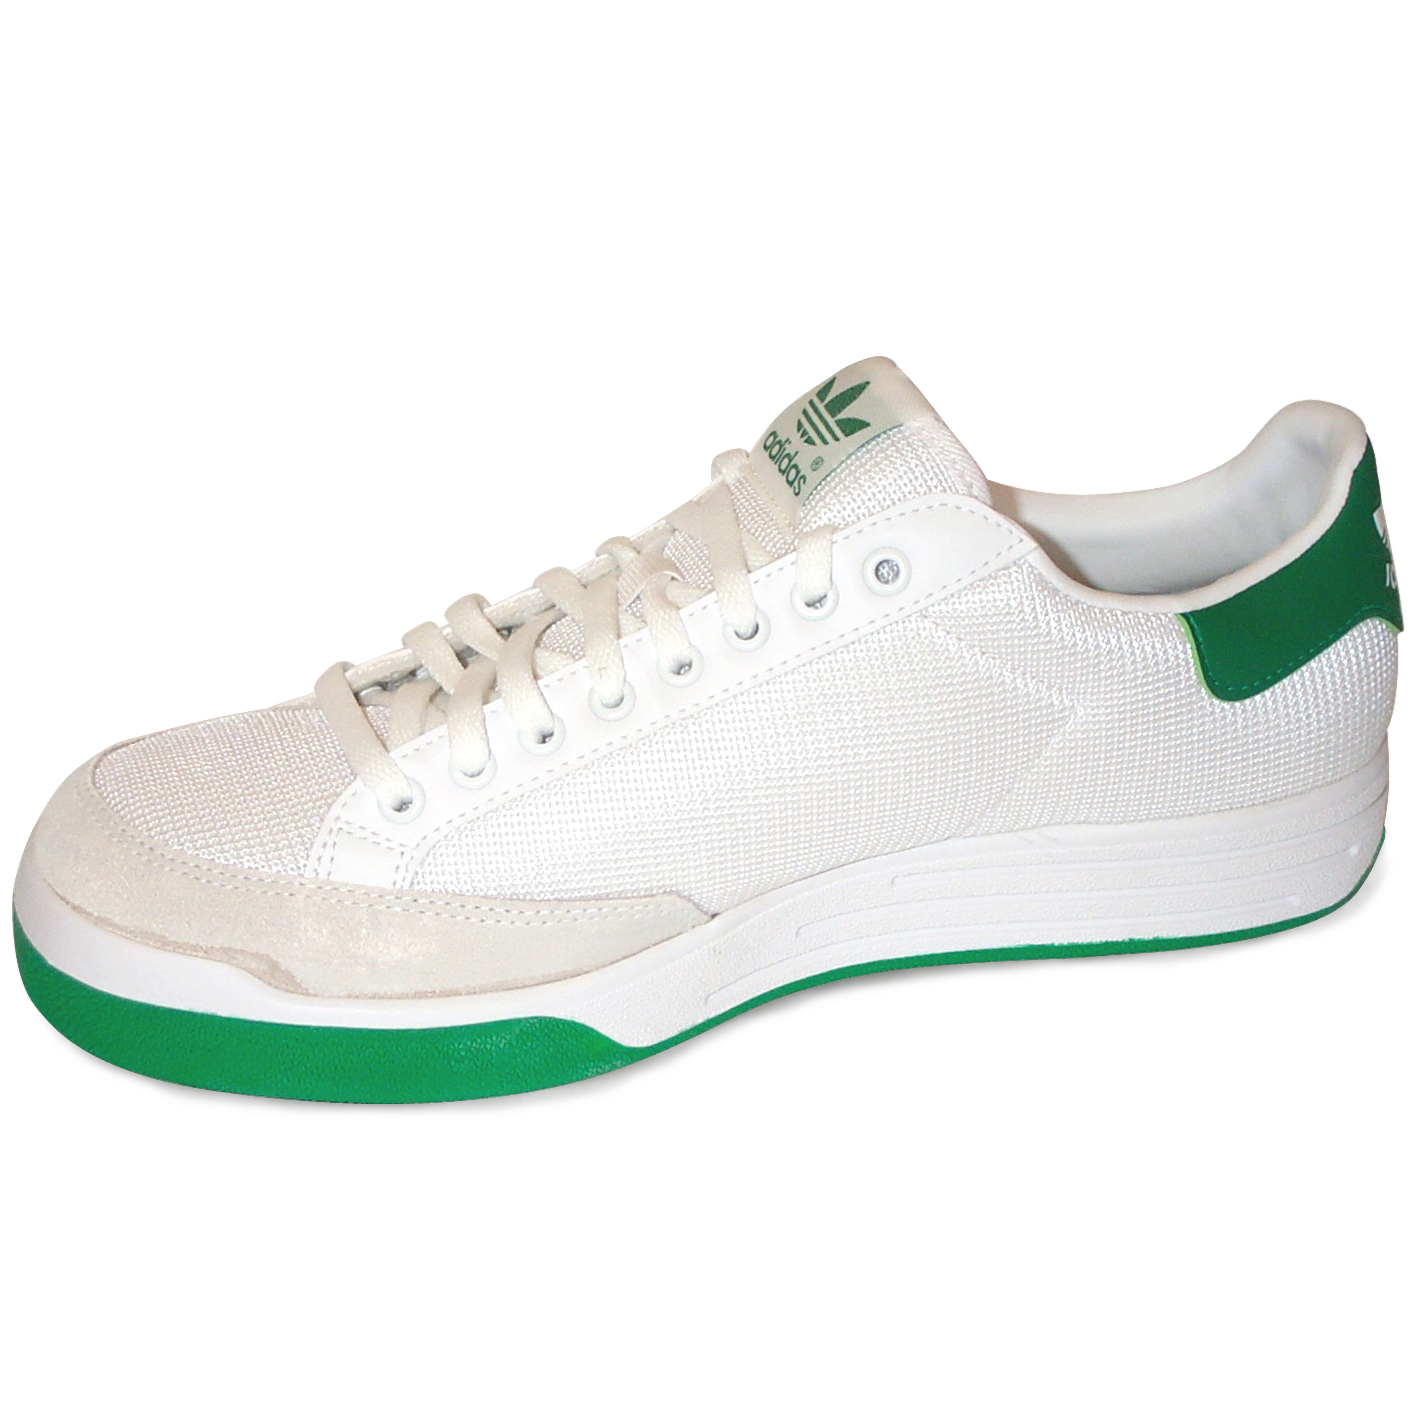 Adidas Rod Laver Super Tennis Shoes – White/Green | World